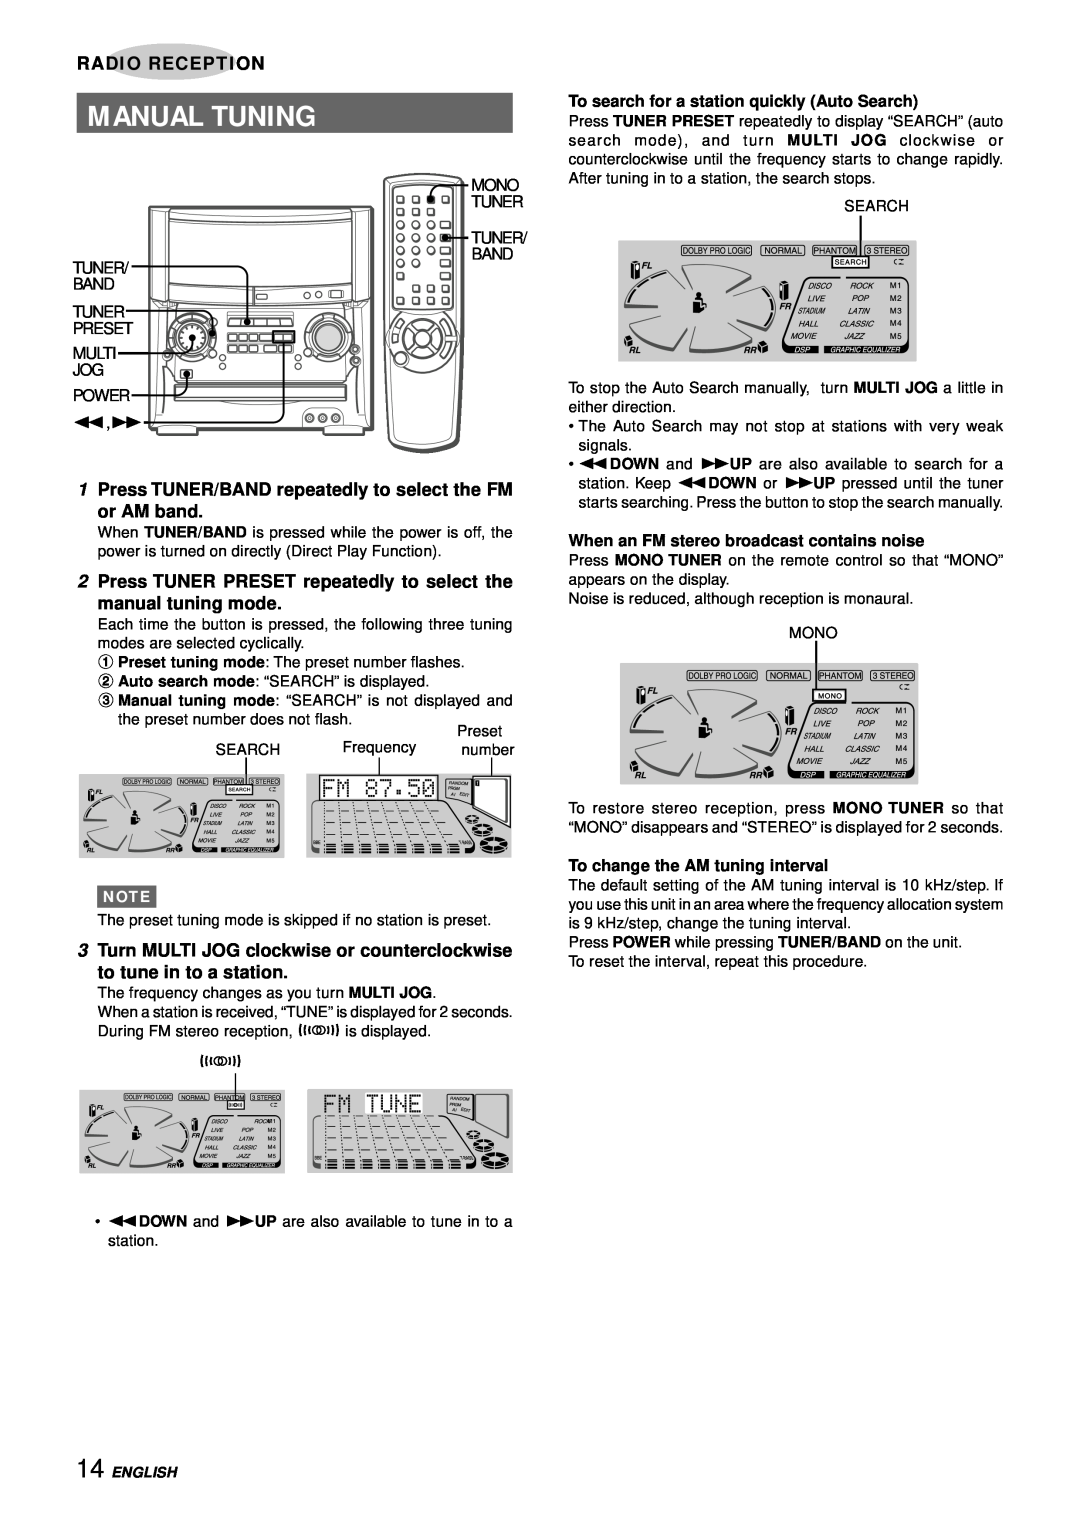 Aiwa XH-A1000 Manual Tuning, 1Press TUNER/BAND repeatedly to select the FM, or AM band, manual tuning mode, English 